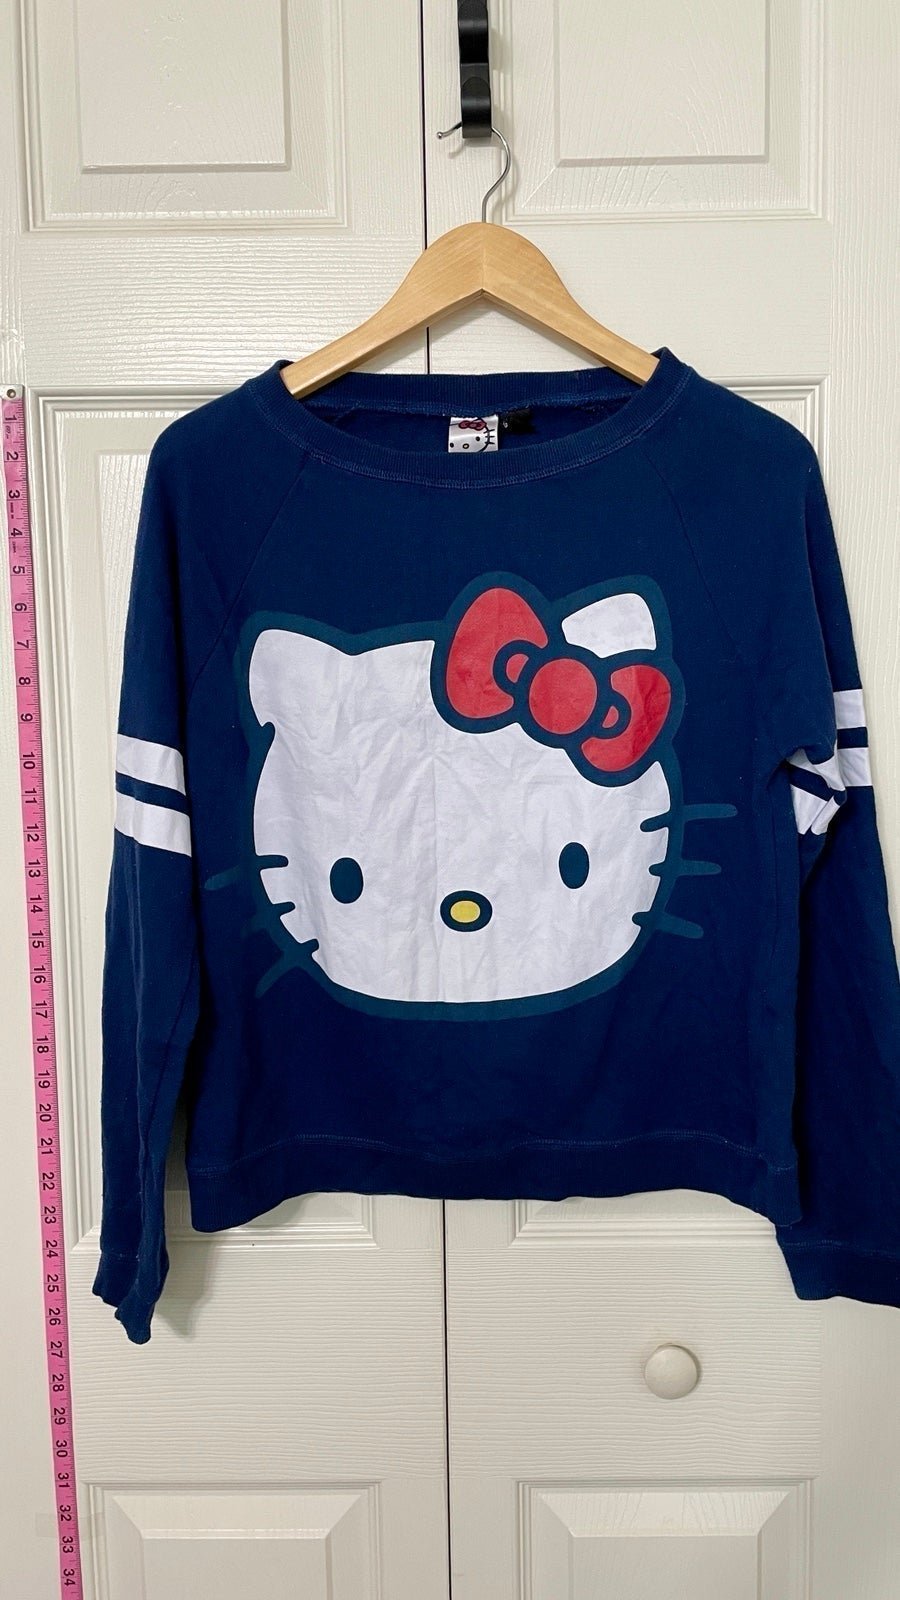 Discounted Sanrio Hello Kitty Sweater (M) IE7uG3xgc Hig